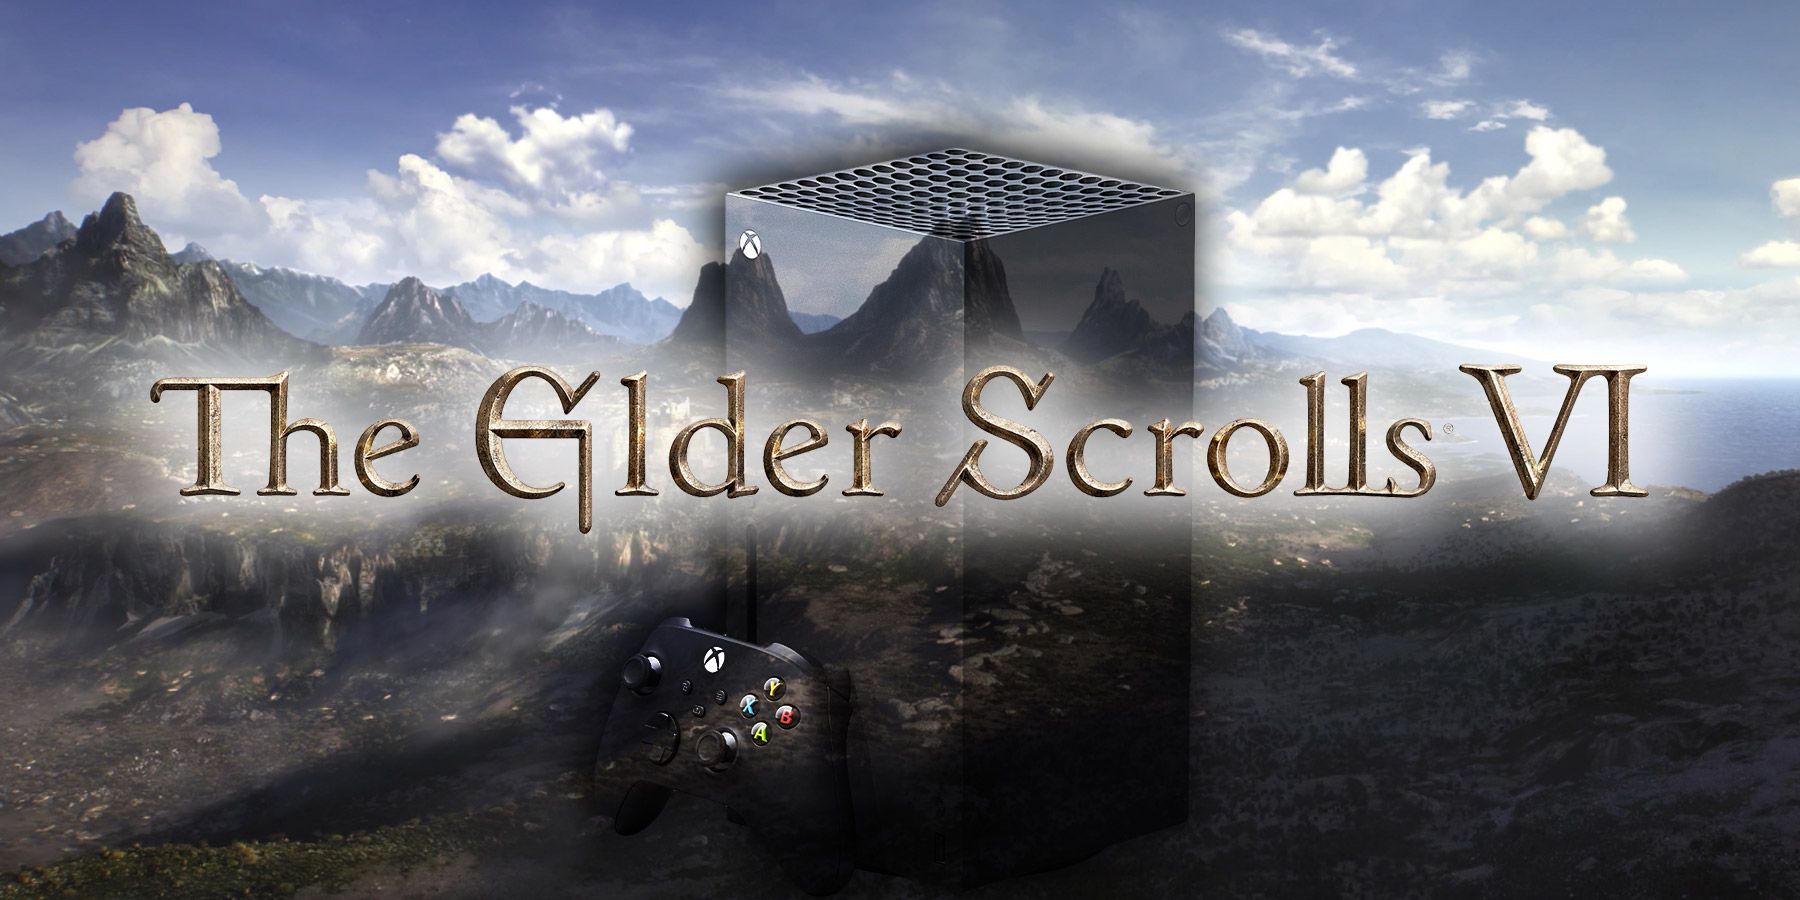 Buy The Elder Scrolls VI Other